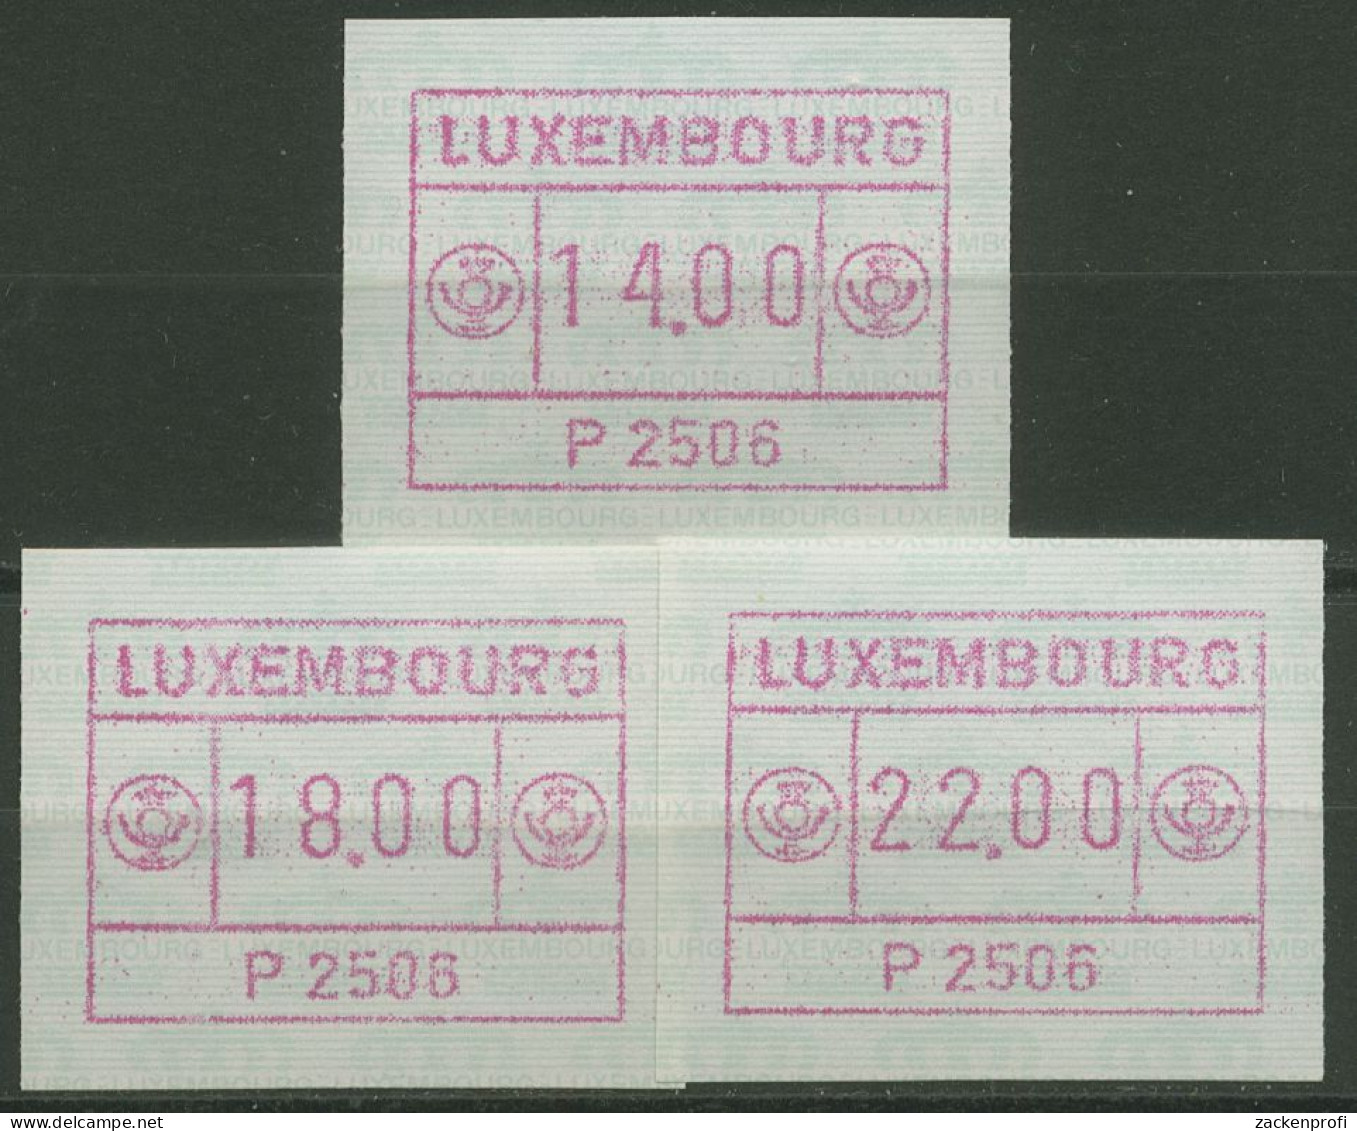 Luxemburg 1983 Automatenmarke Automat P 2506 Satz 1.6 D S4 Postfrisch - Postage Labels